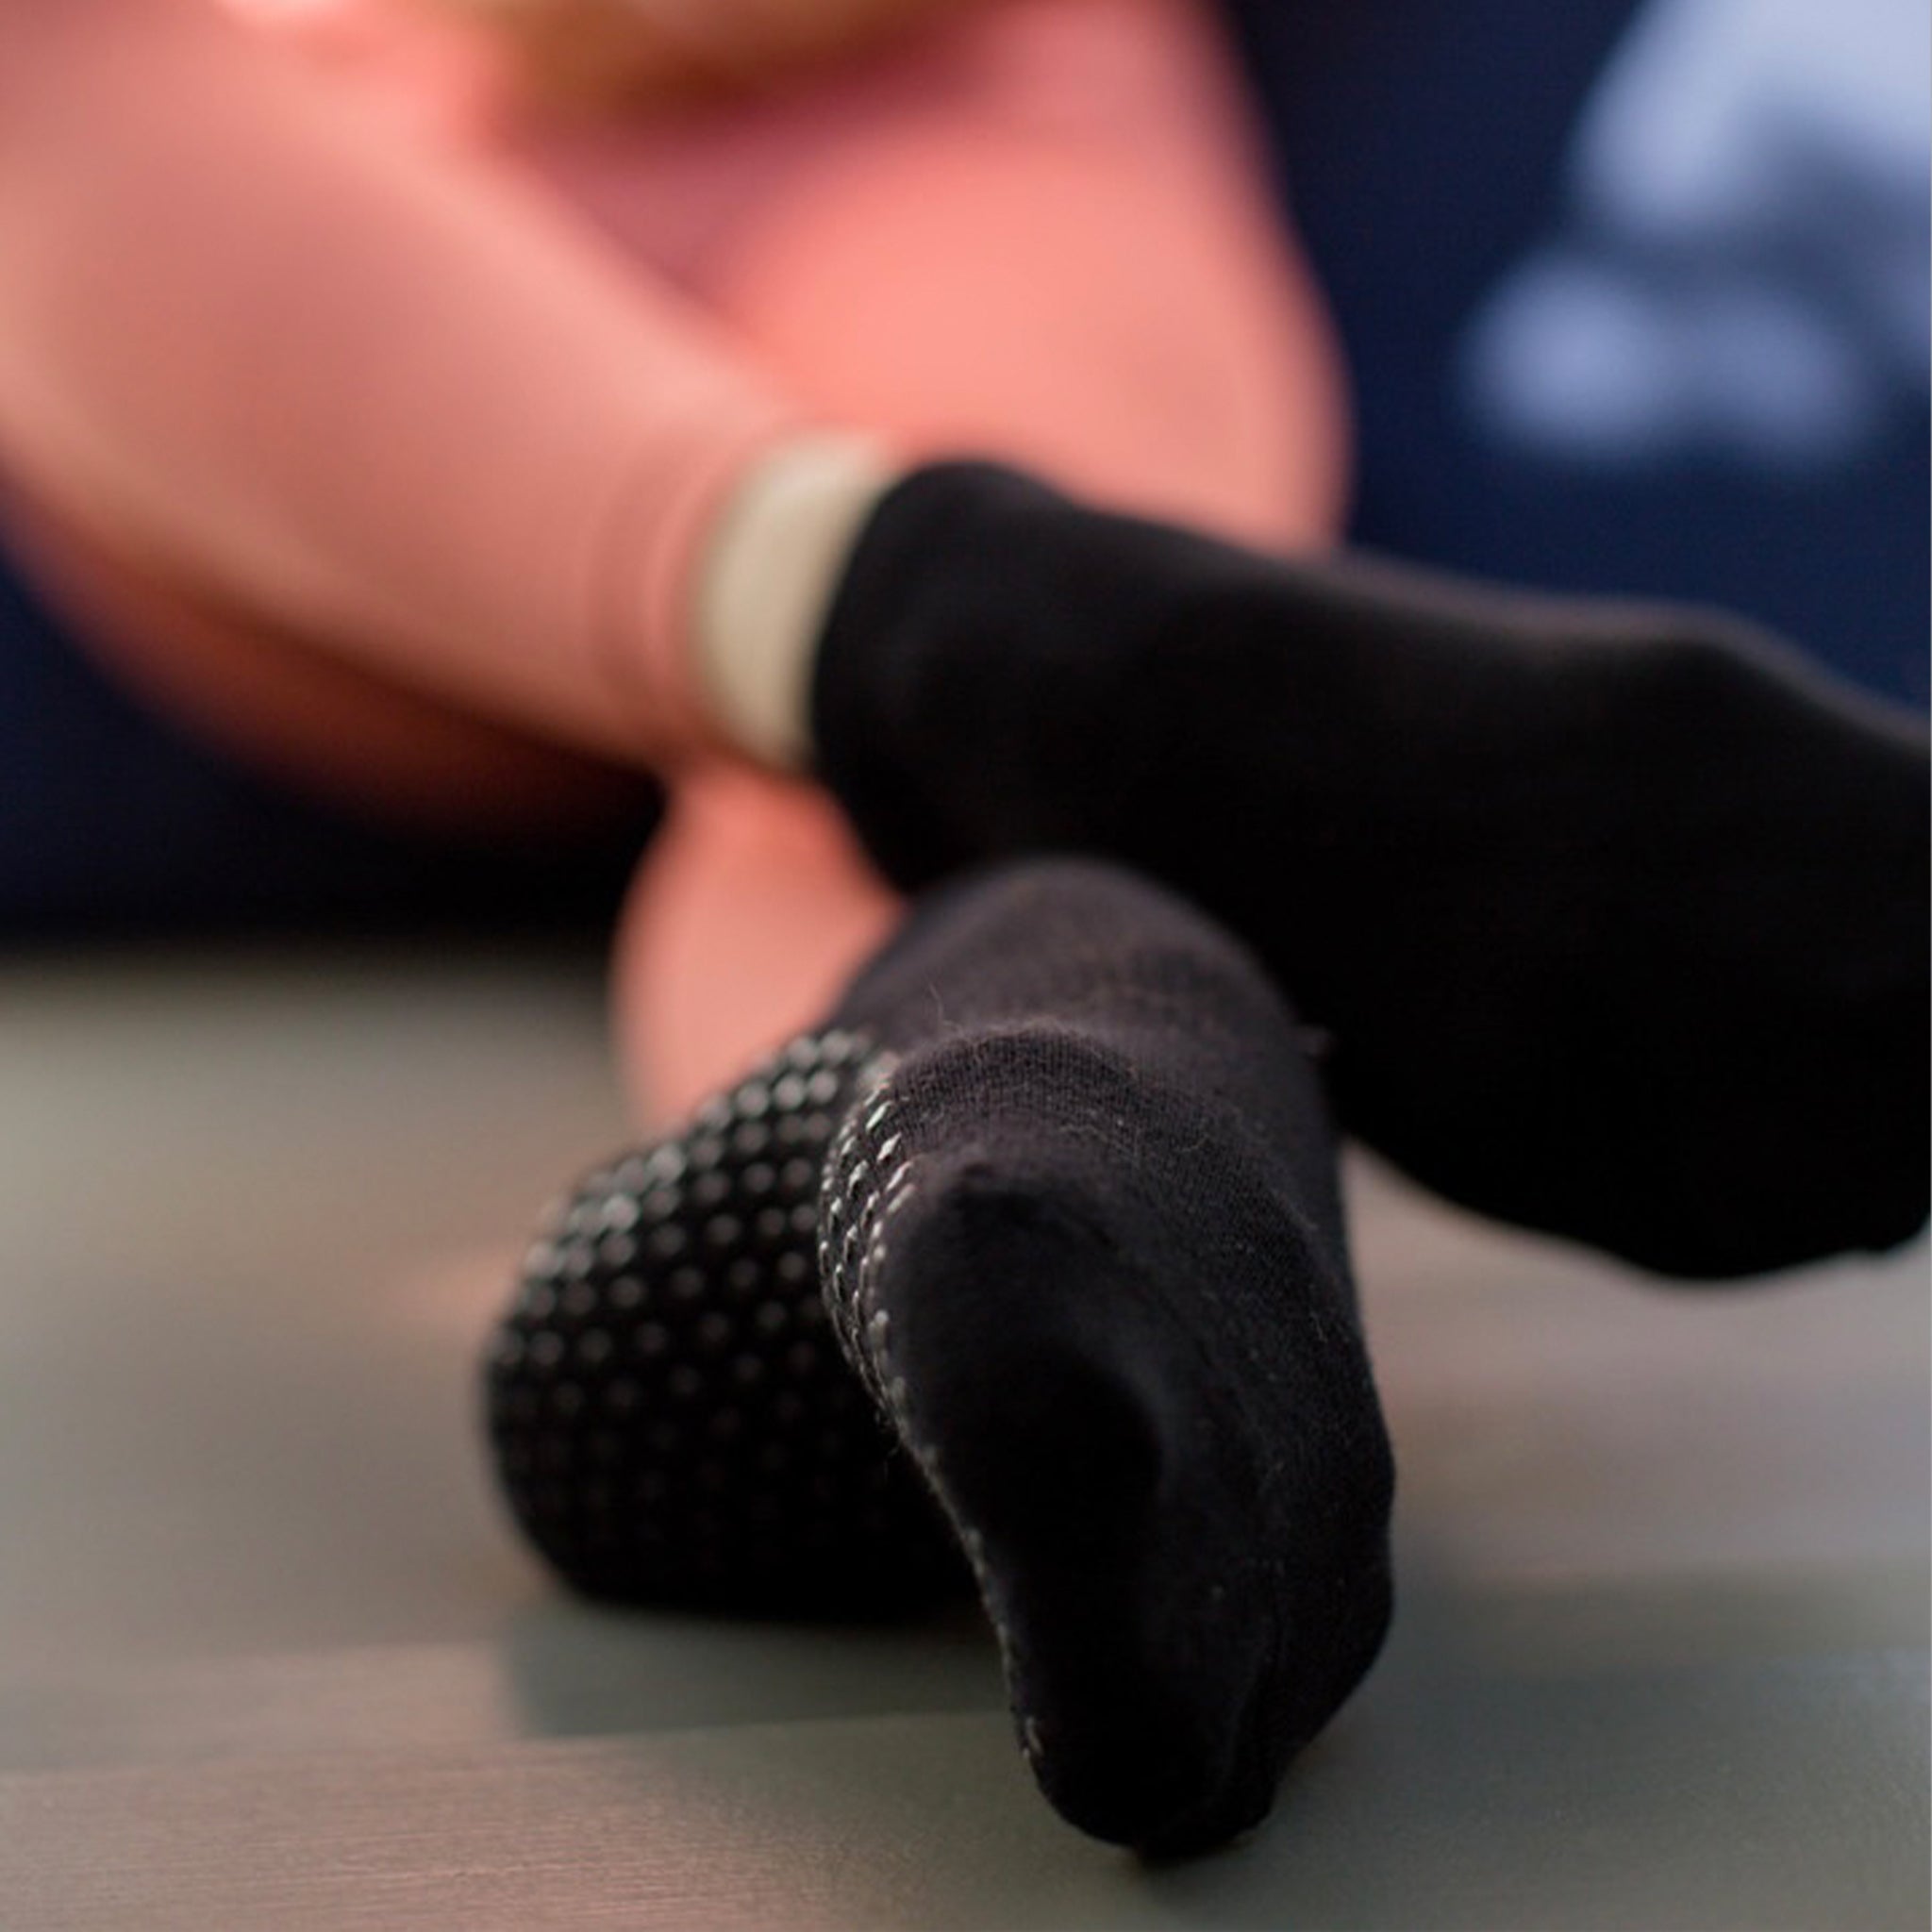 Grippy Socks - Black/Punch